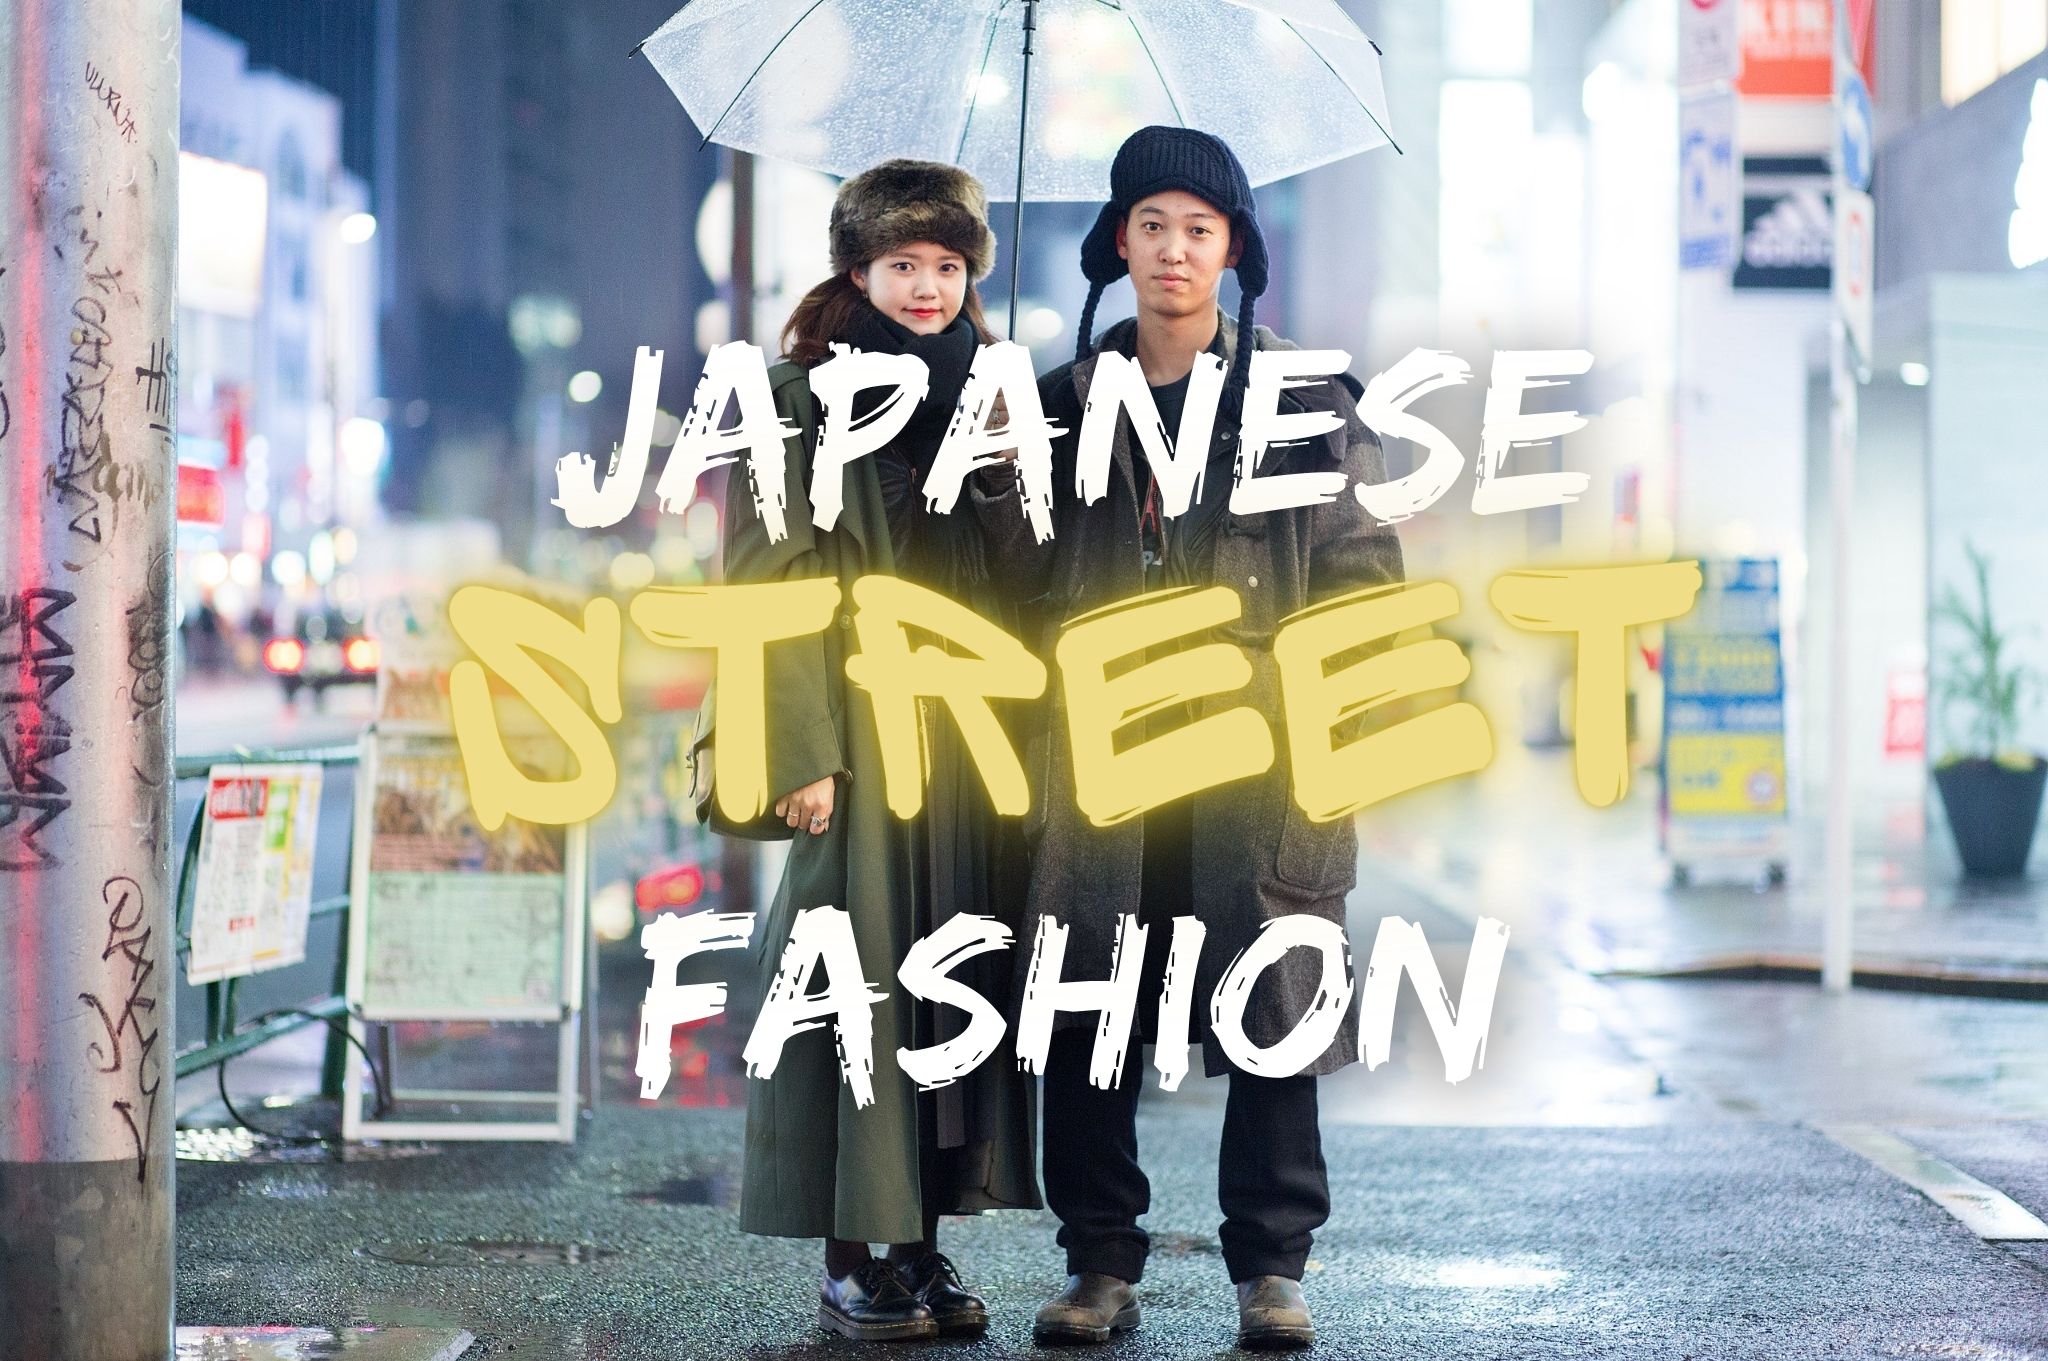 Japanese Street Fashion: Popular Brands in Japan